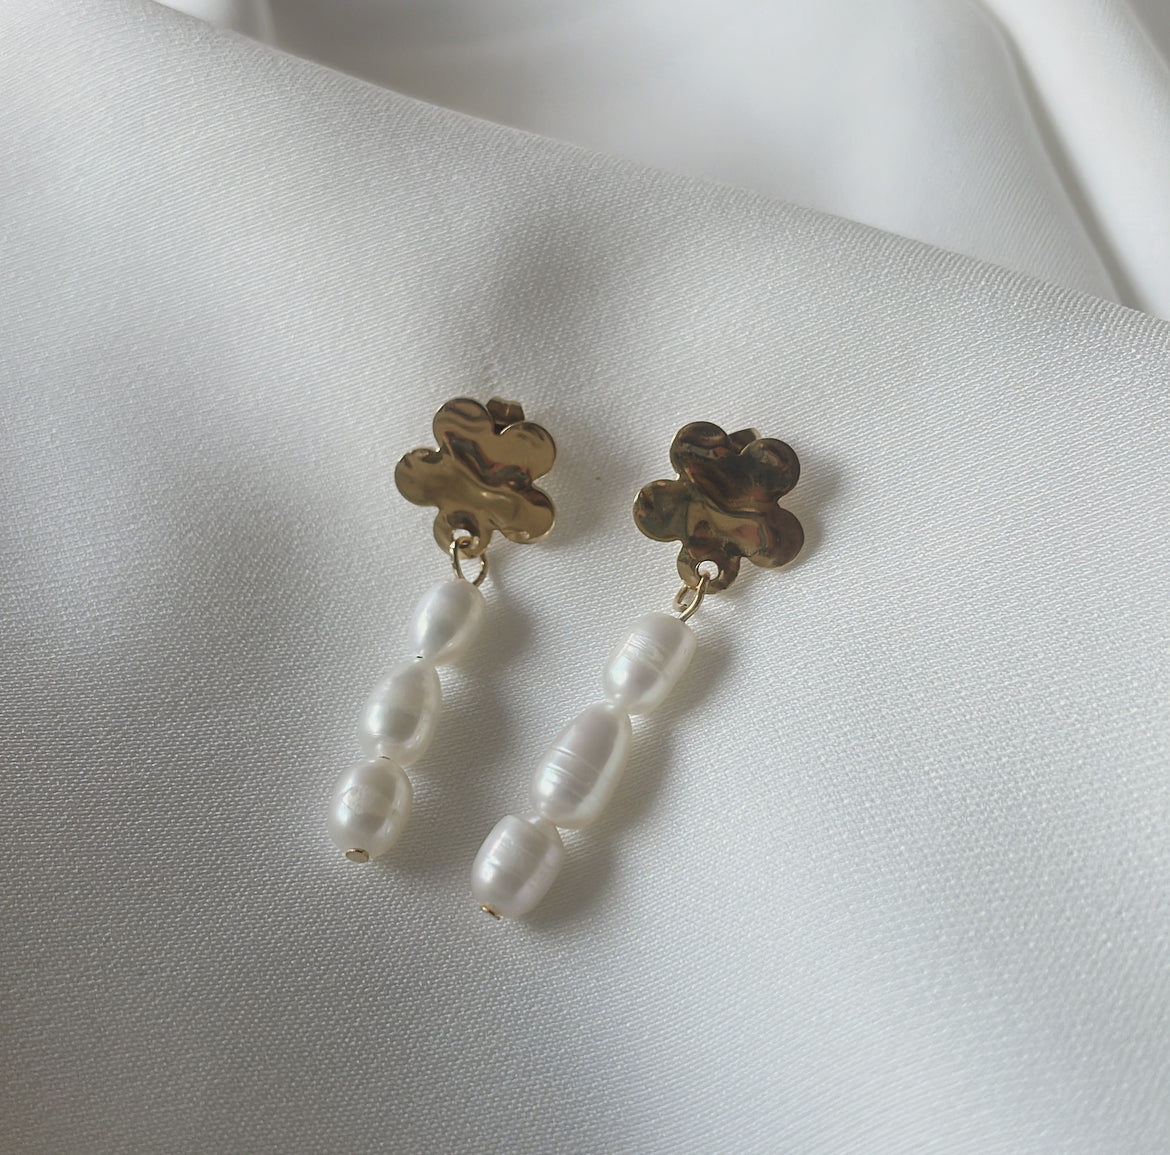 ‘FLOWER PEARL’ earrings